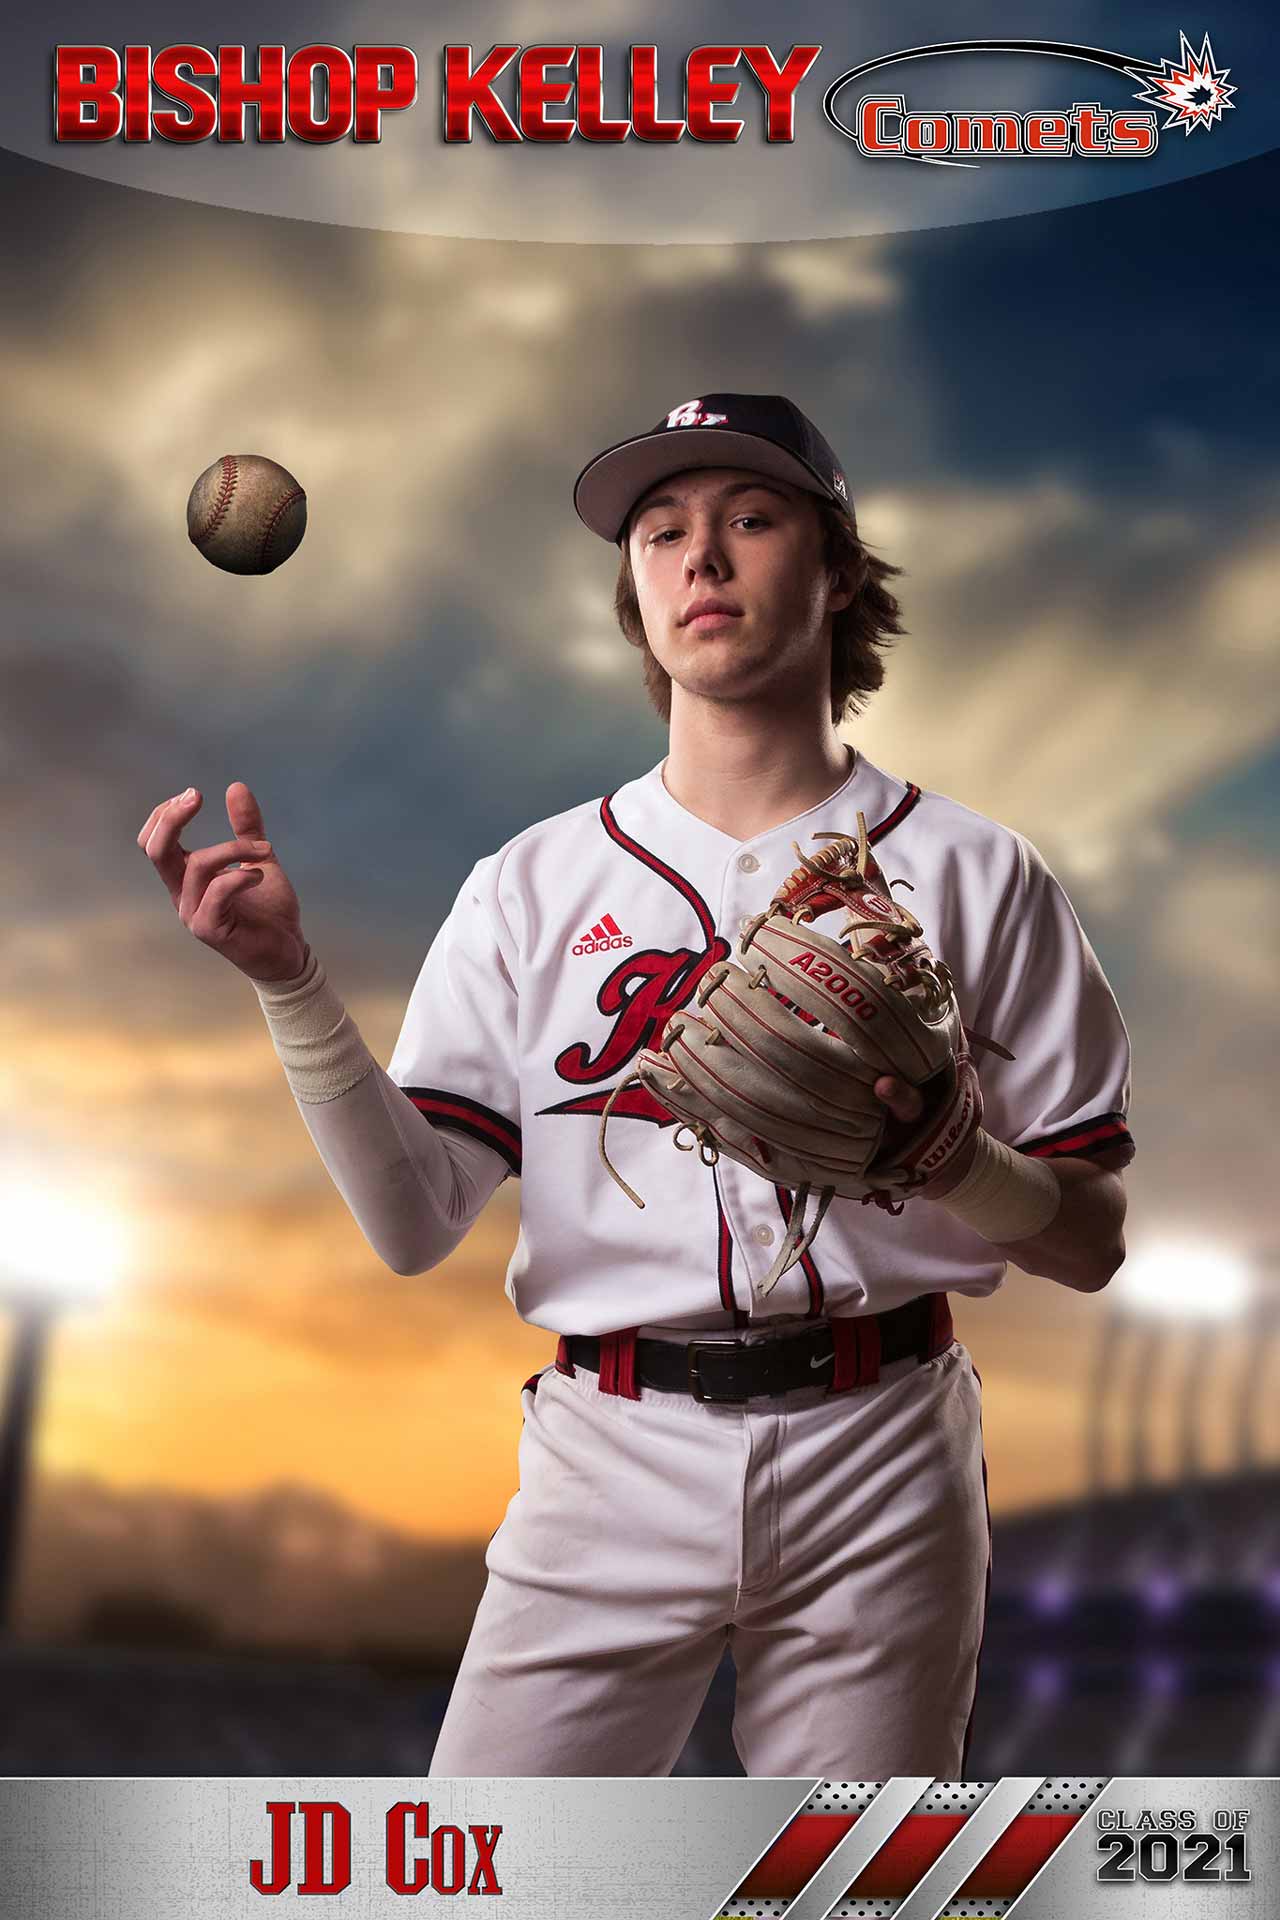 Corrado Cardinals baseball shoot — Ripe Images RipeImages